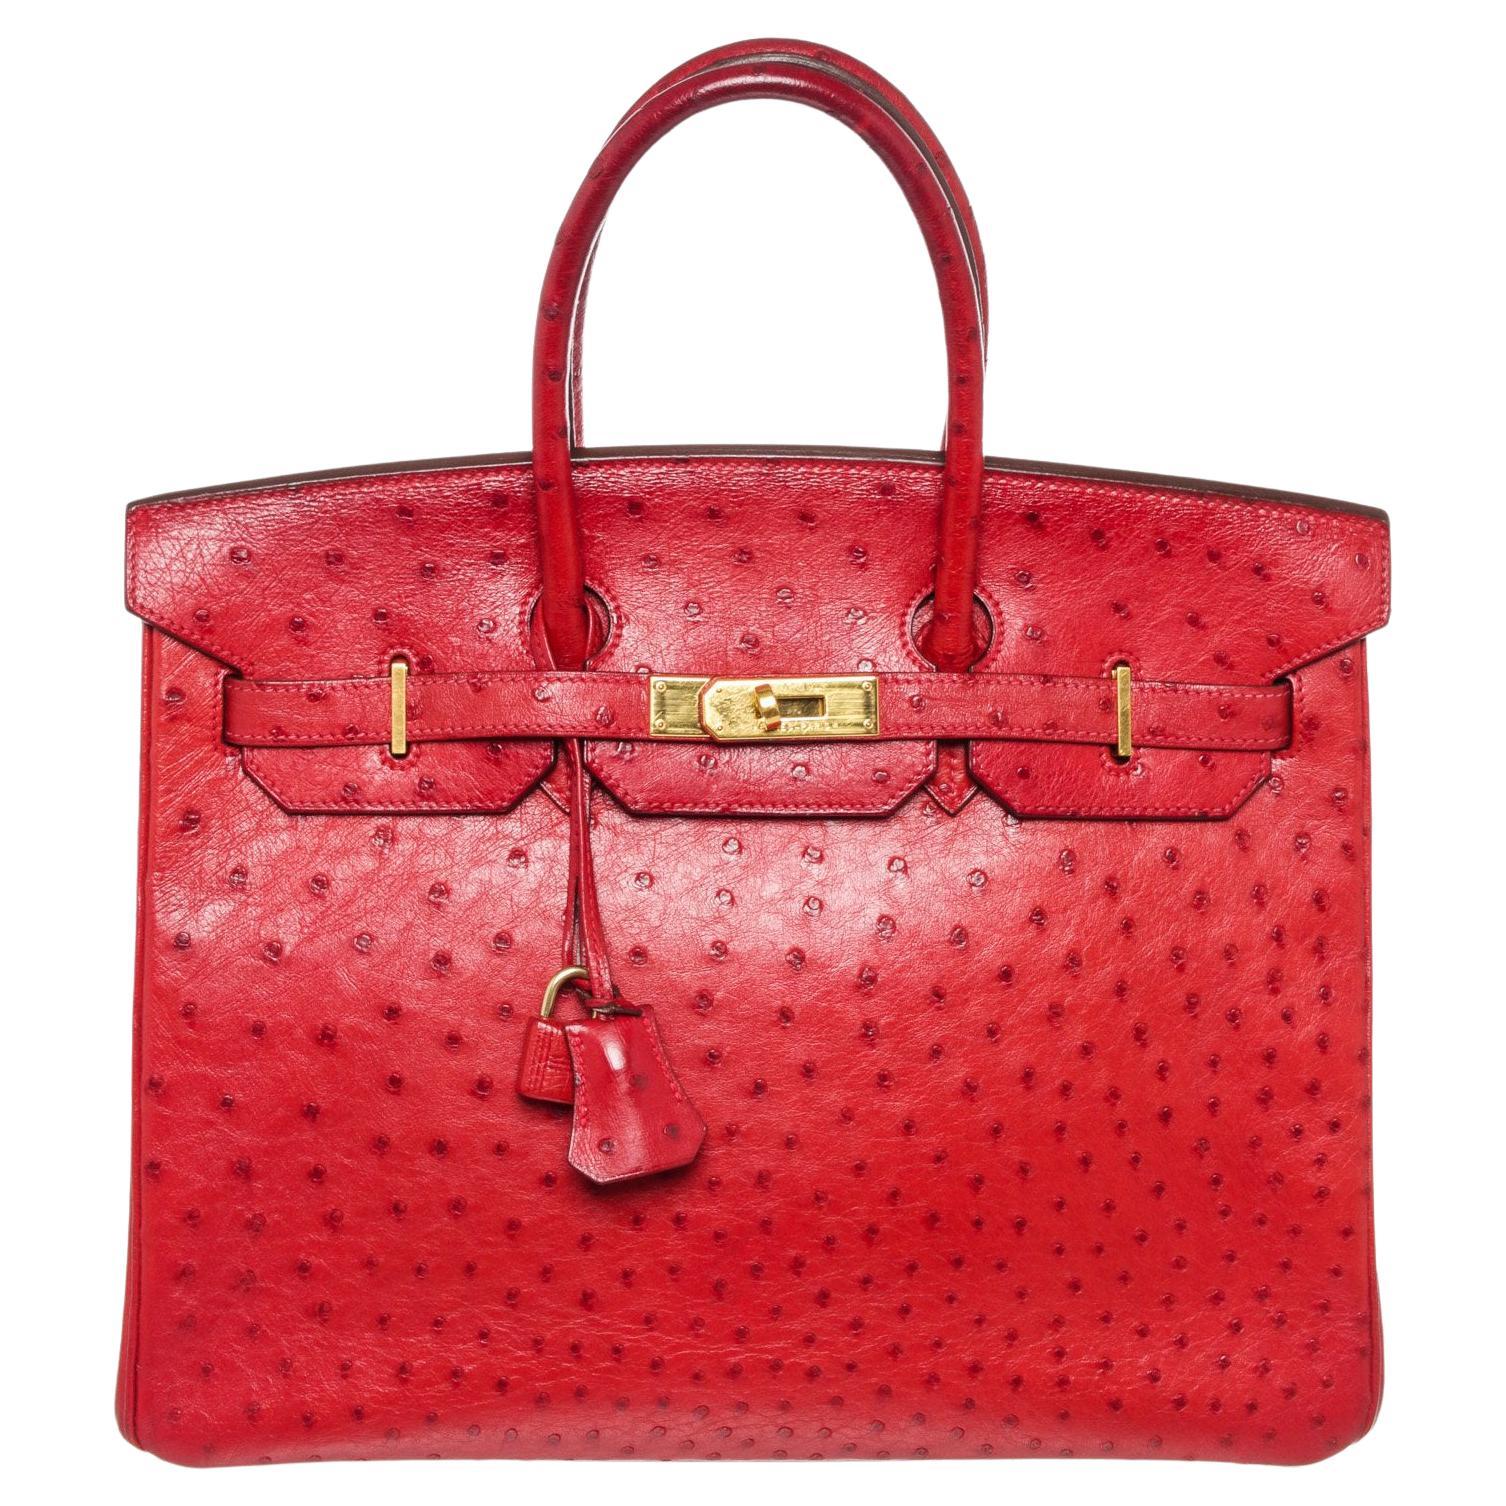 Hermes Red Leather Ostrich GHW Birkin 35cm Satchel Bag